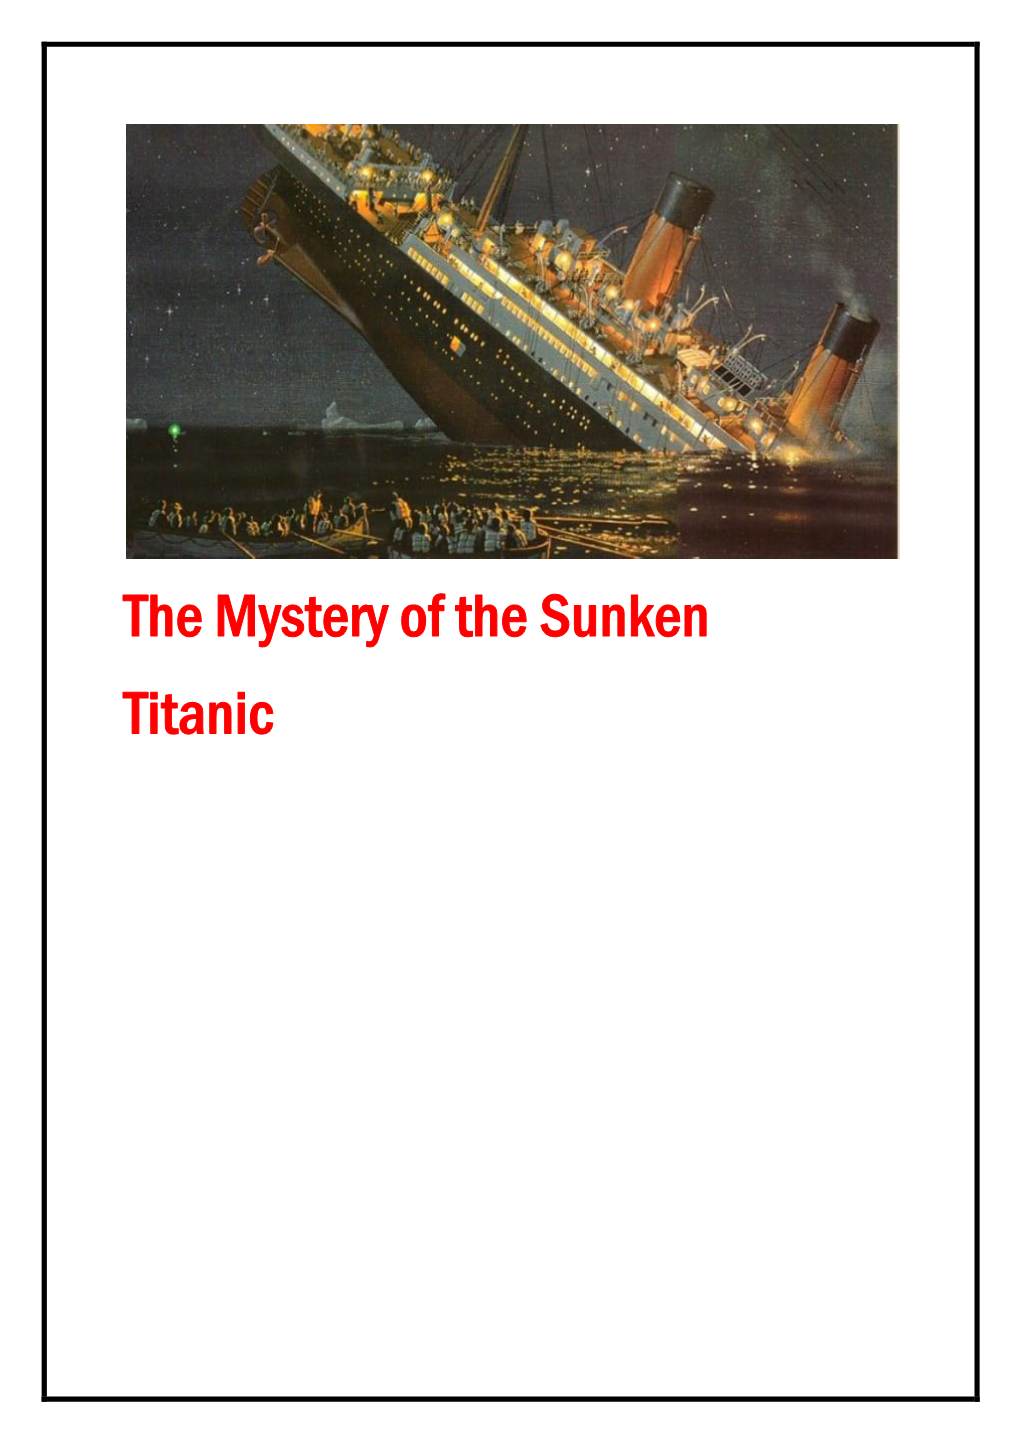 The Mystery of the Sunken Titanic